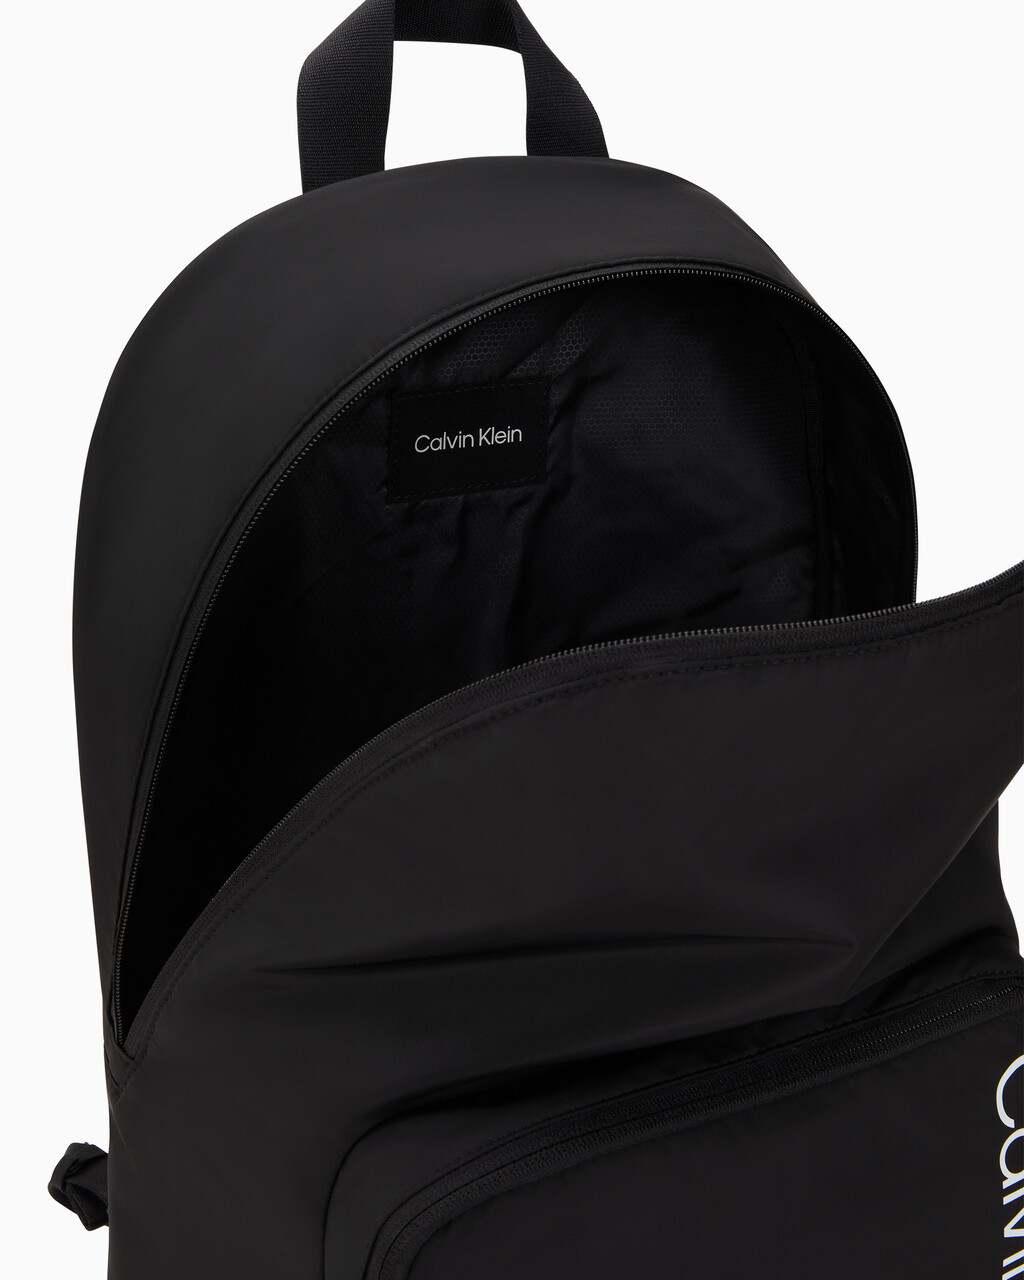 Round Backpack, BLACK BEAUTY, hi-res